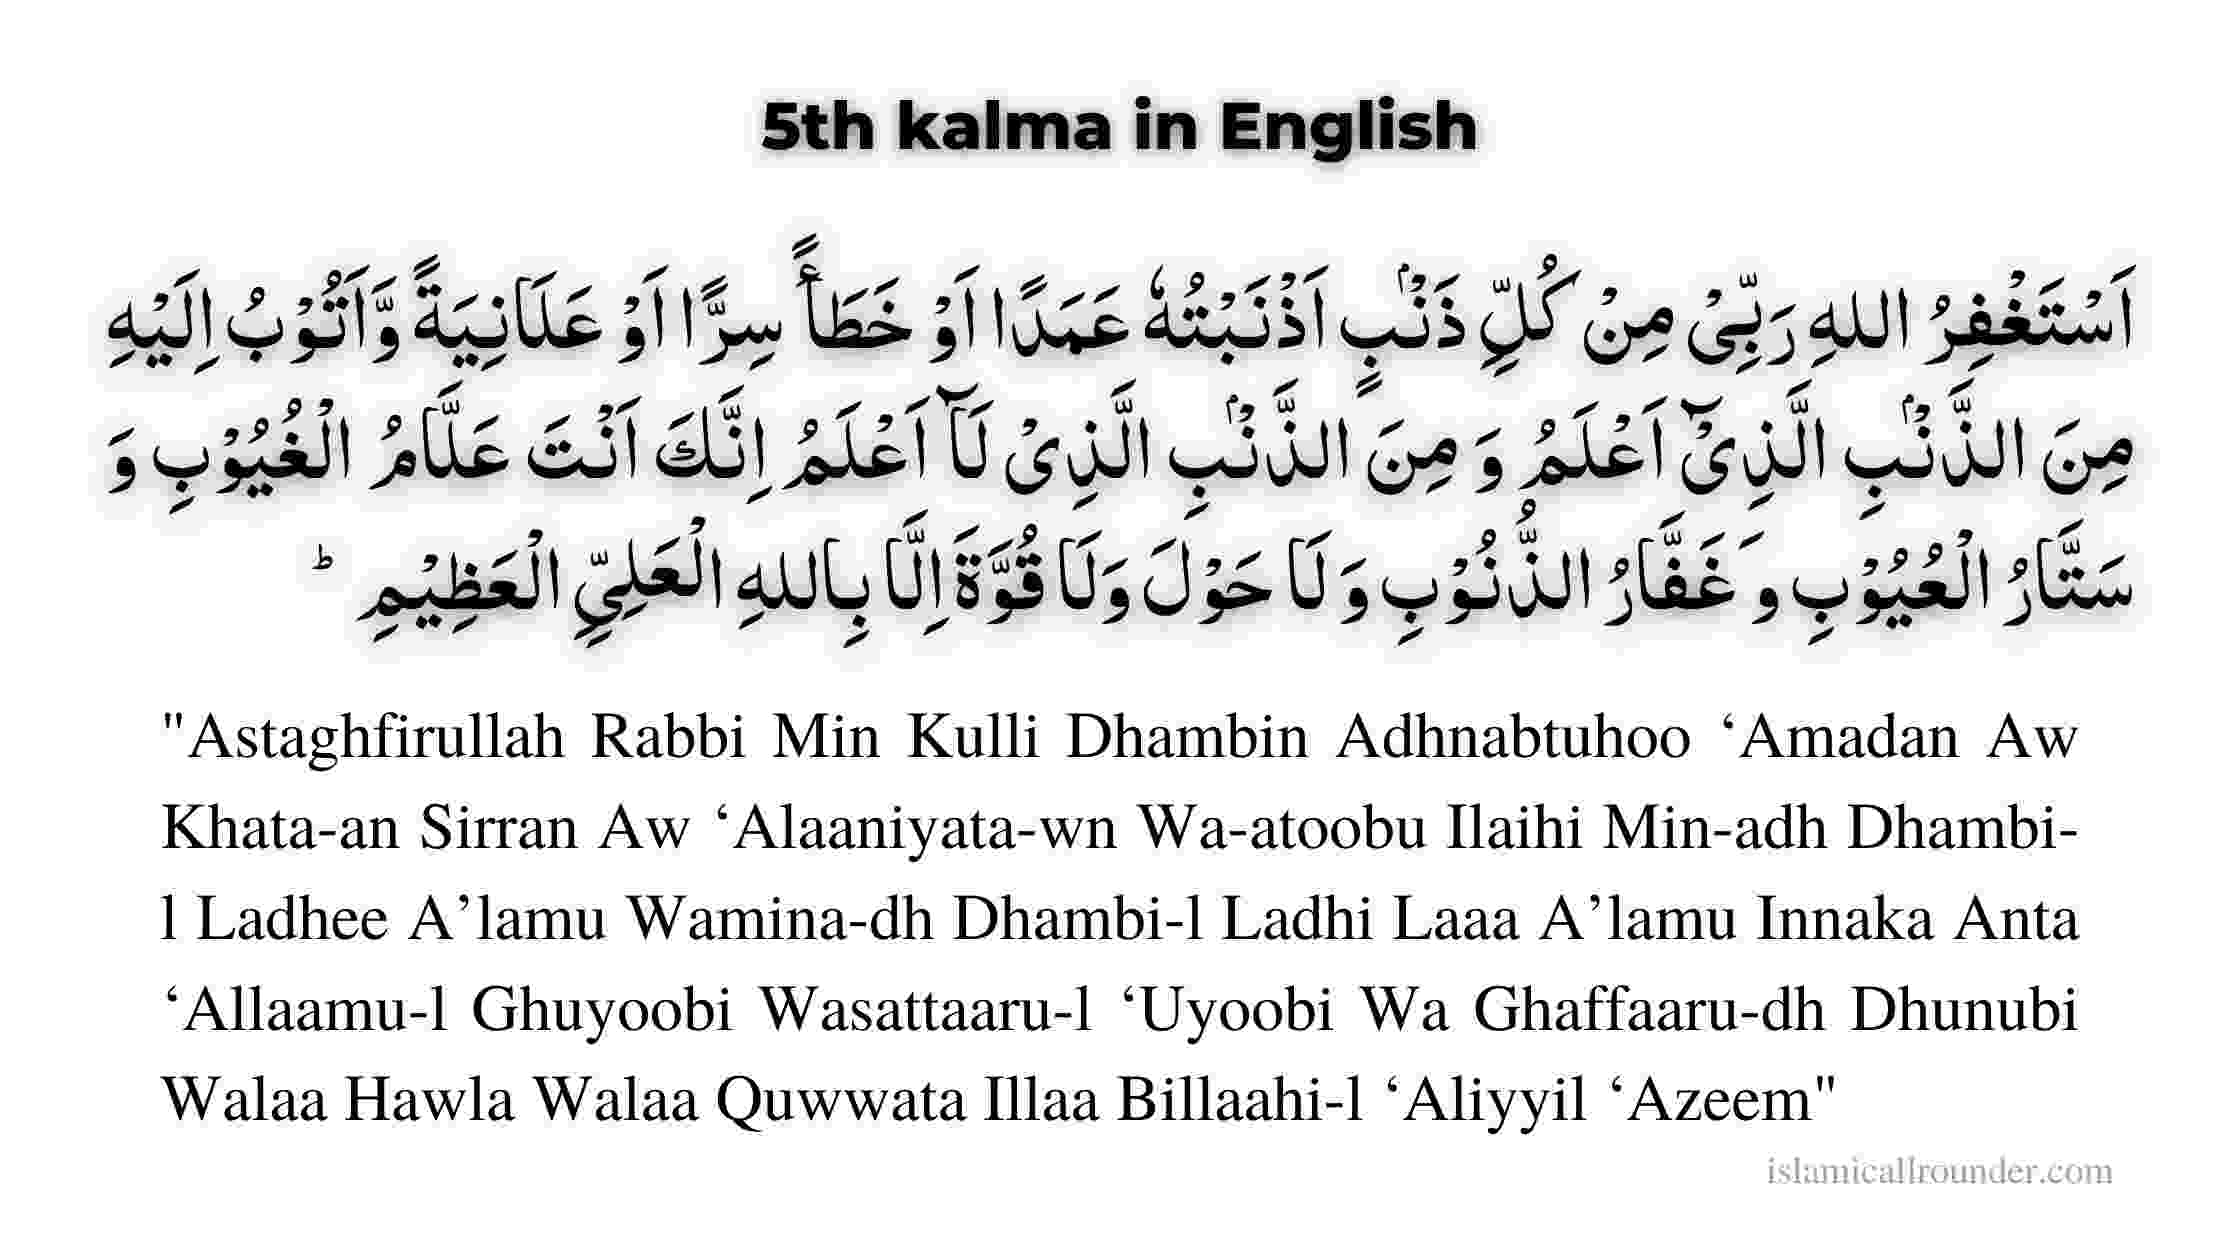 5th kalma in English Transliteration